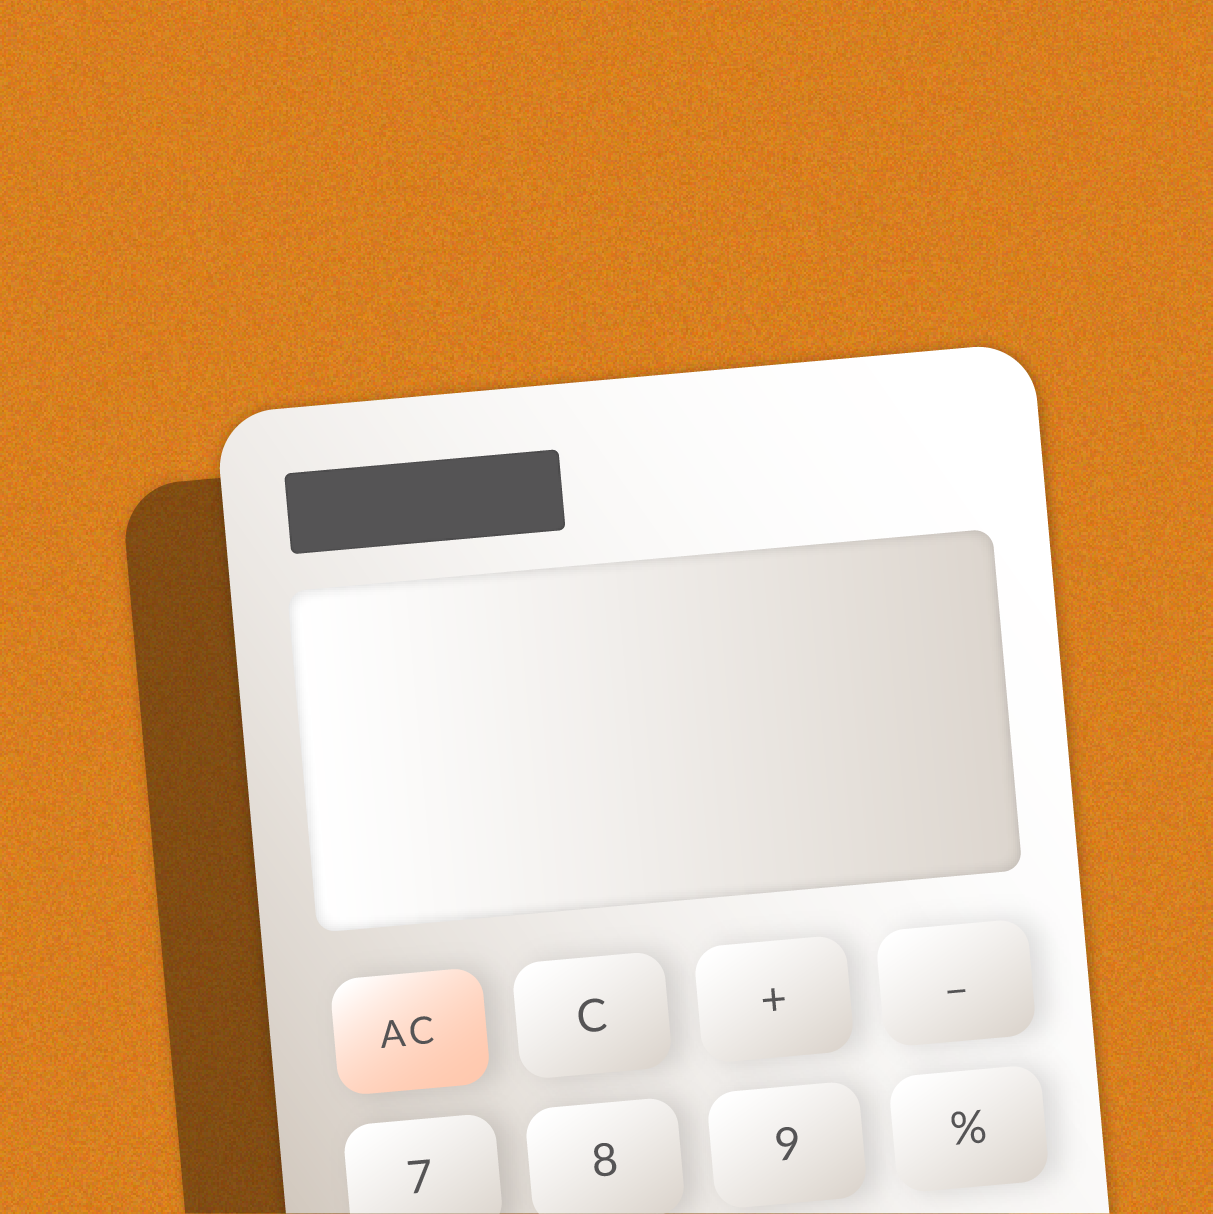 An illustration of a calculator.